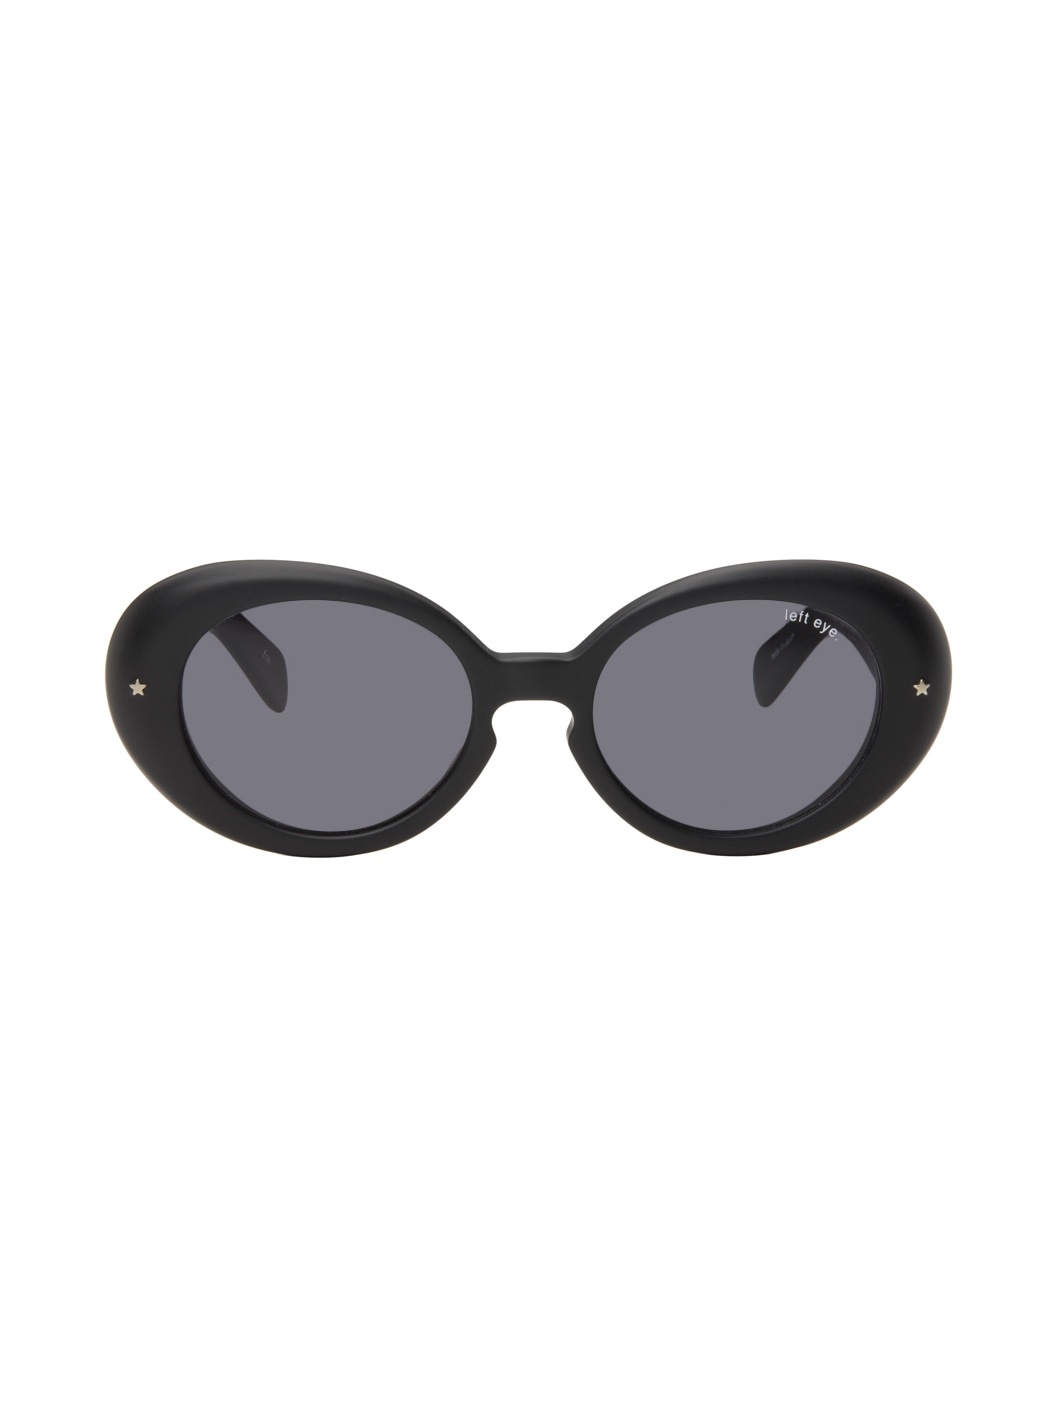 Black Kurt Sunglasses - 1